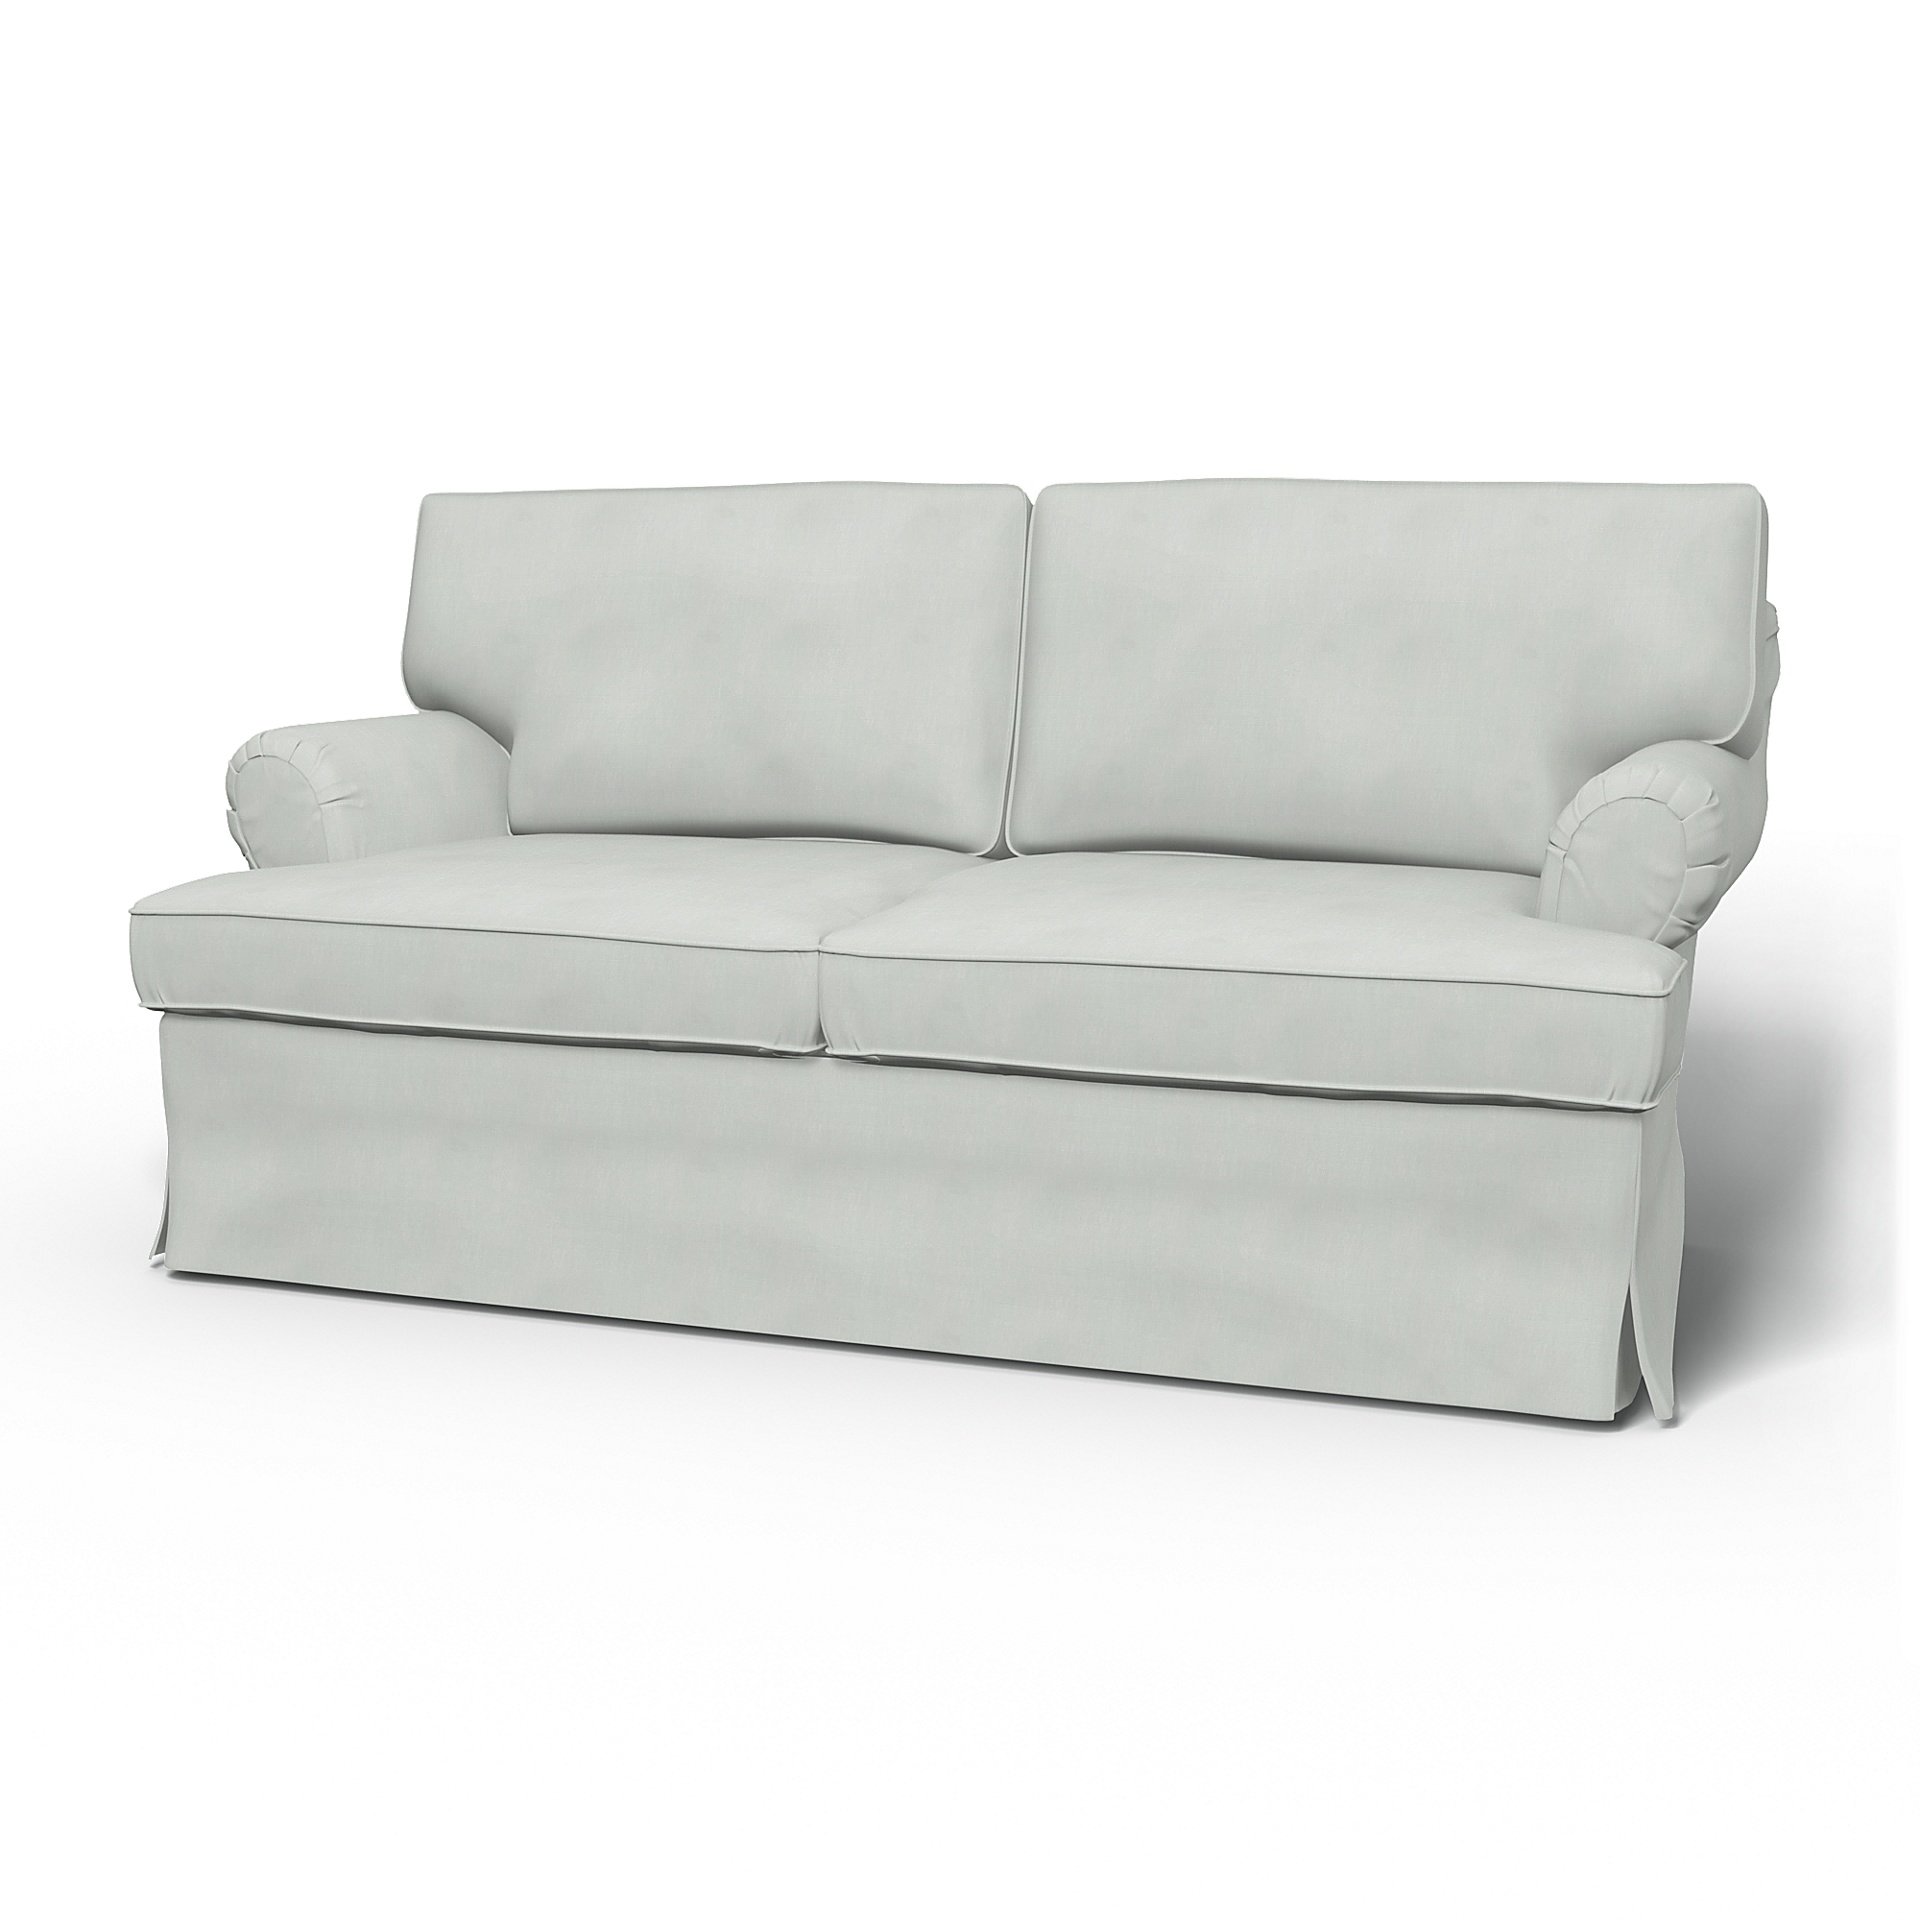 IKEA - Stockholm 2 Seater Sofa Cover (1994-2000), Silver Grey, Linen - Bemz